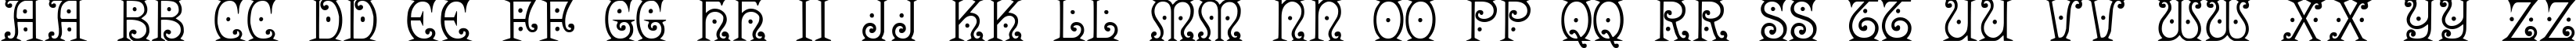 Пример написания английского алфавита шрифтом Angel